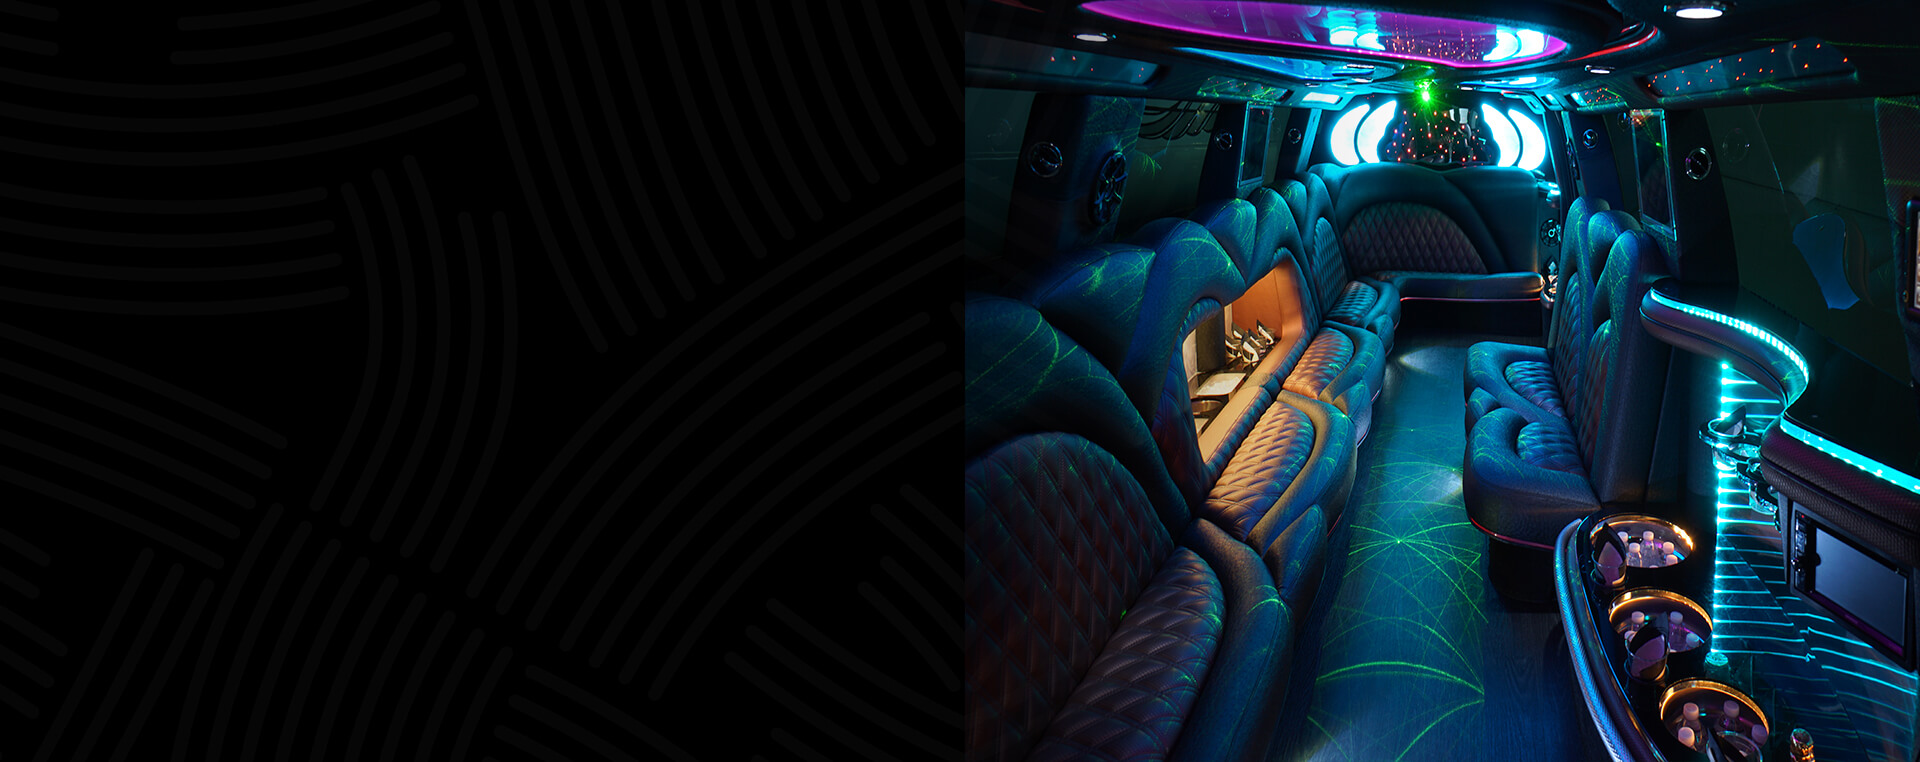 Comfortable limo interior